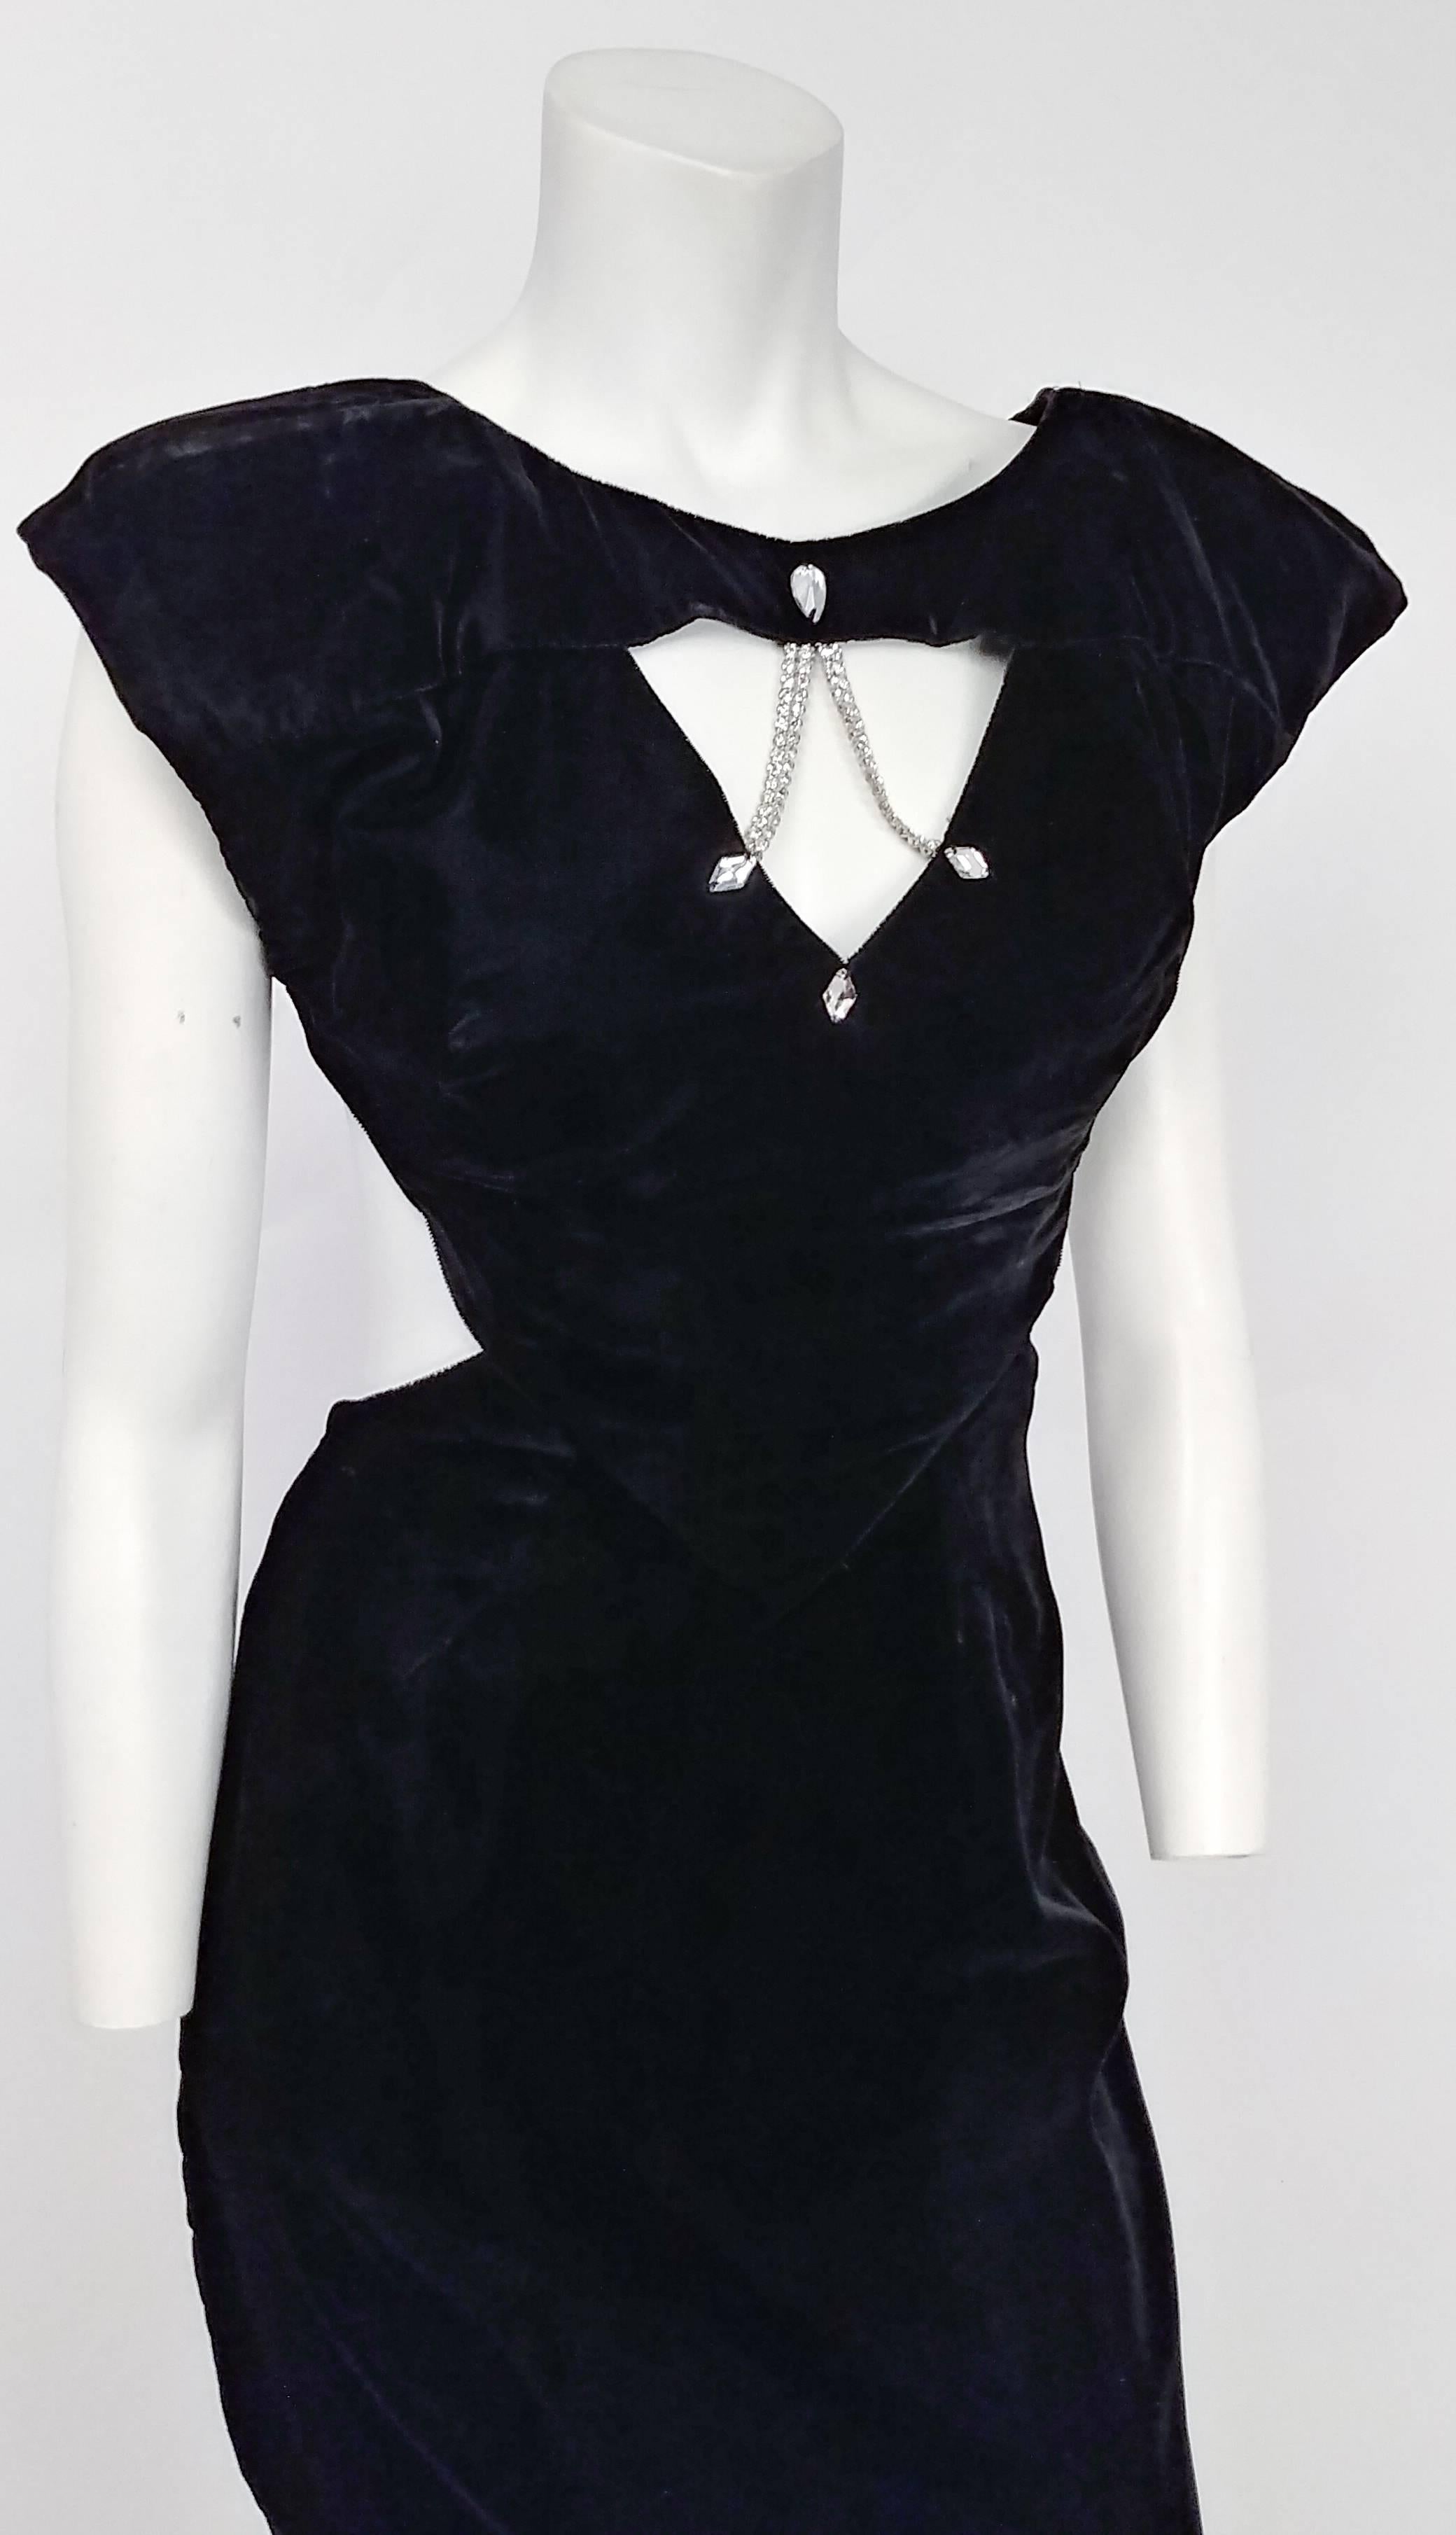 1980s black dress